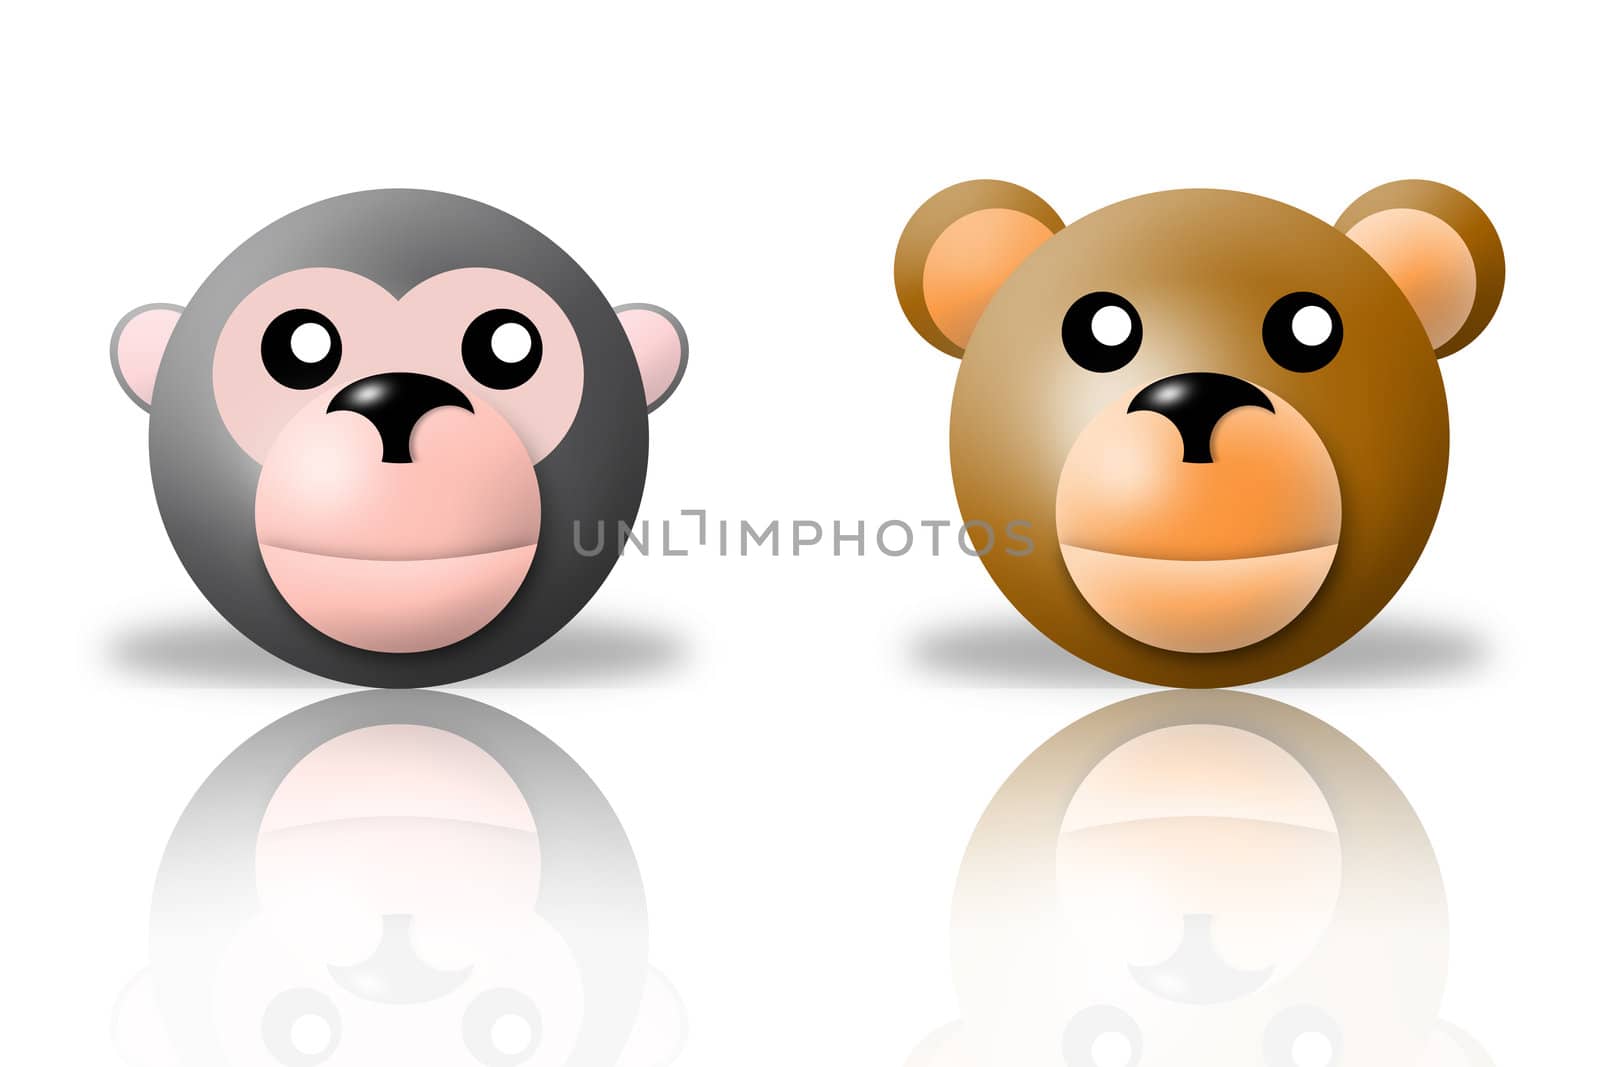 animals icons - monkey and bear. white background and reflection
